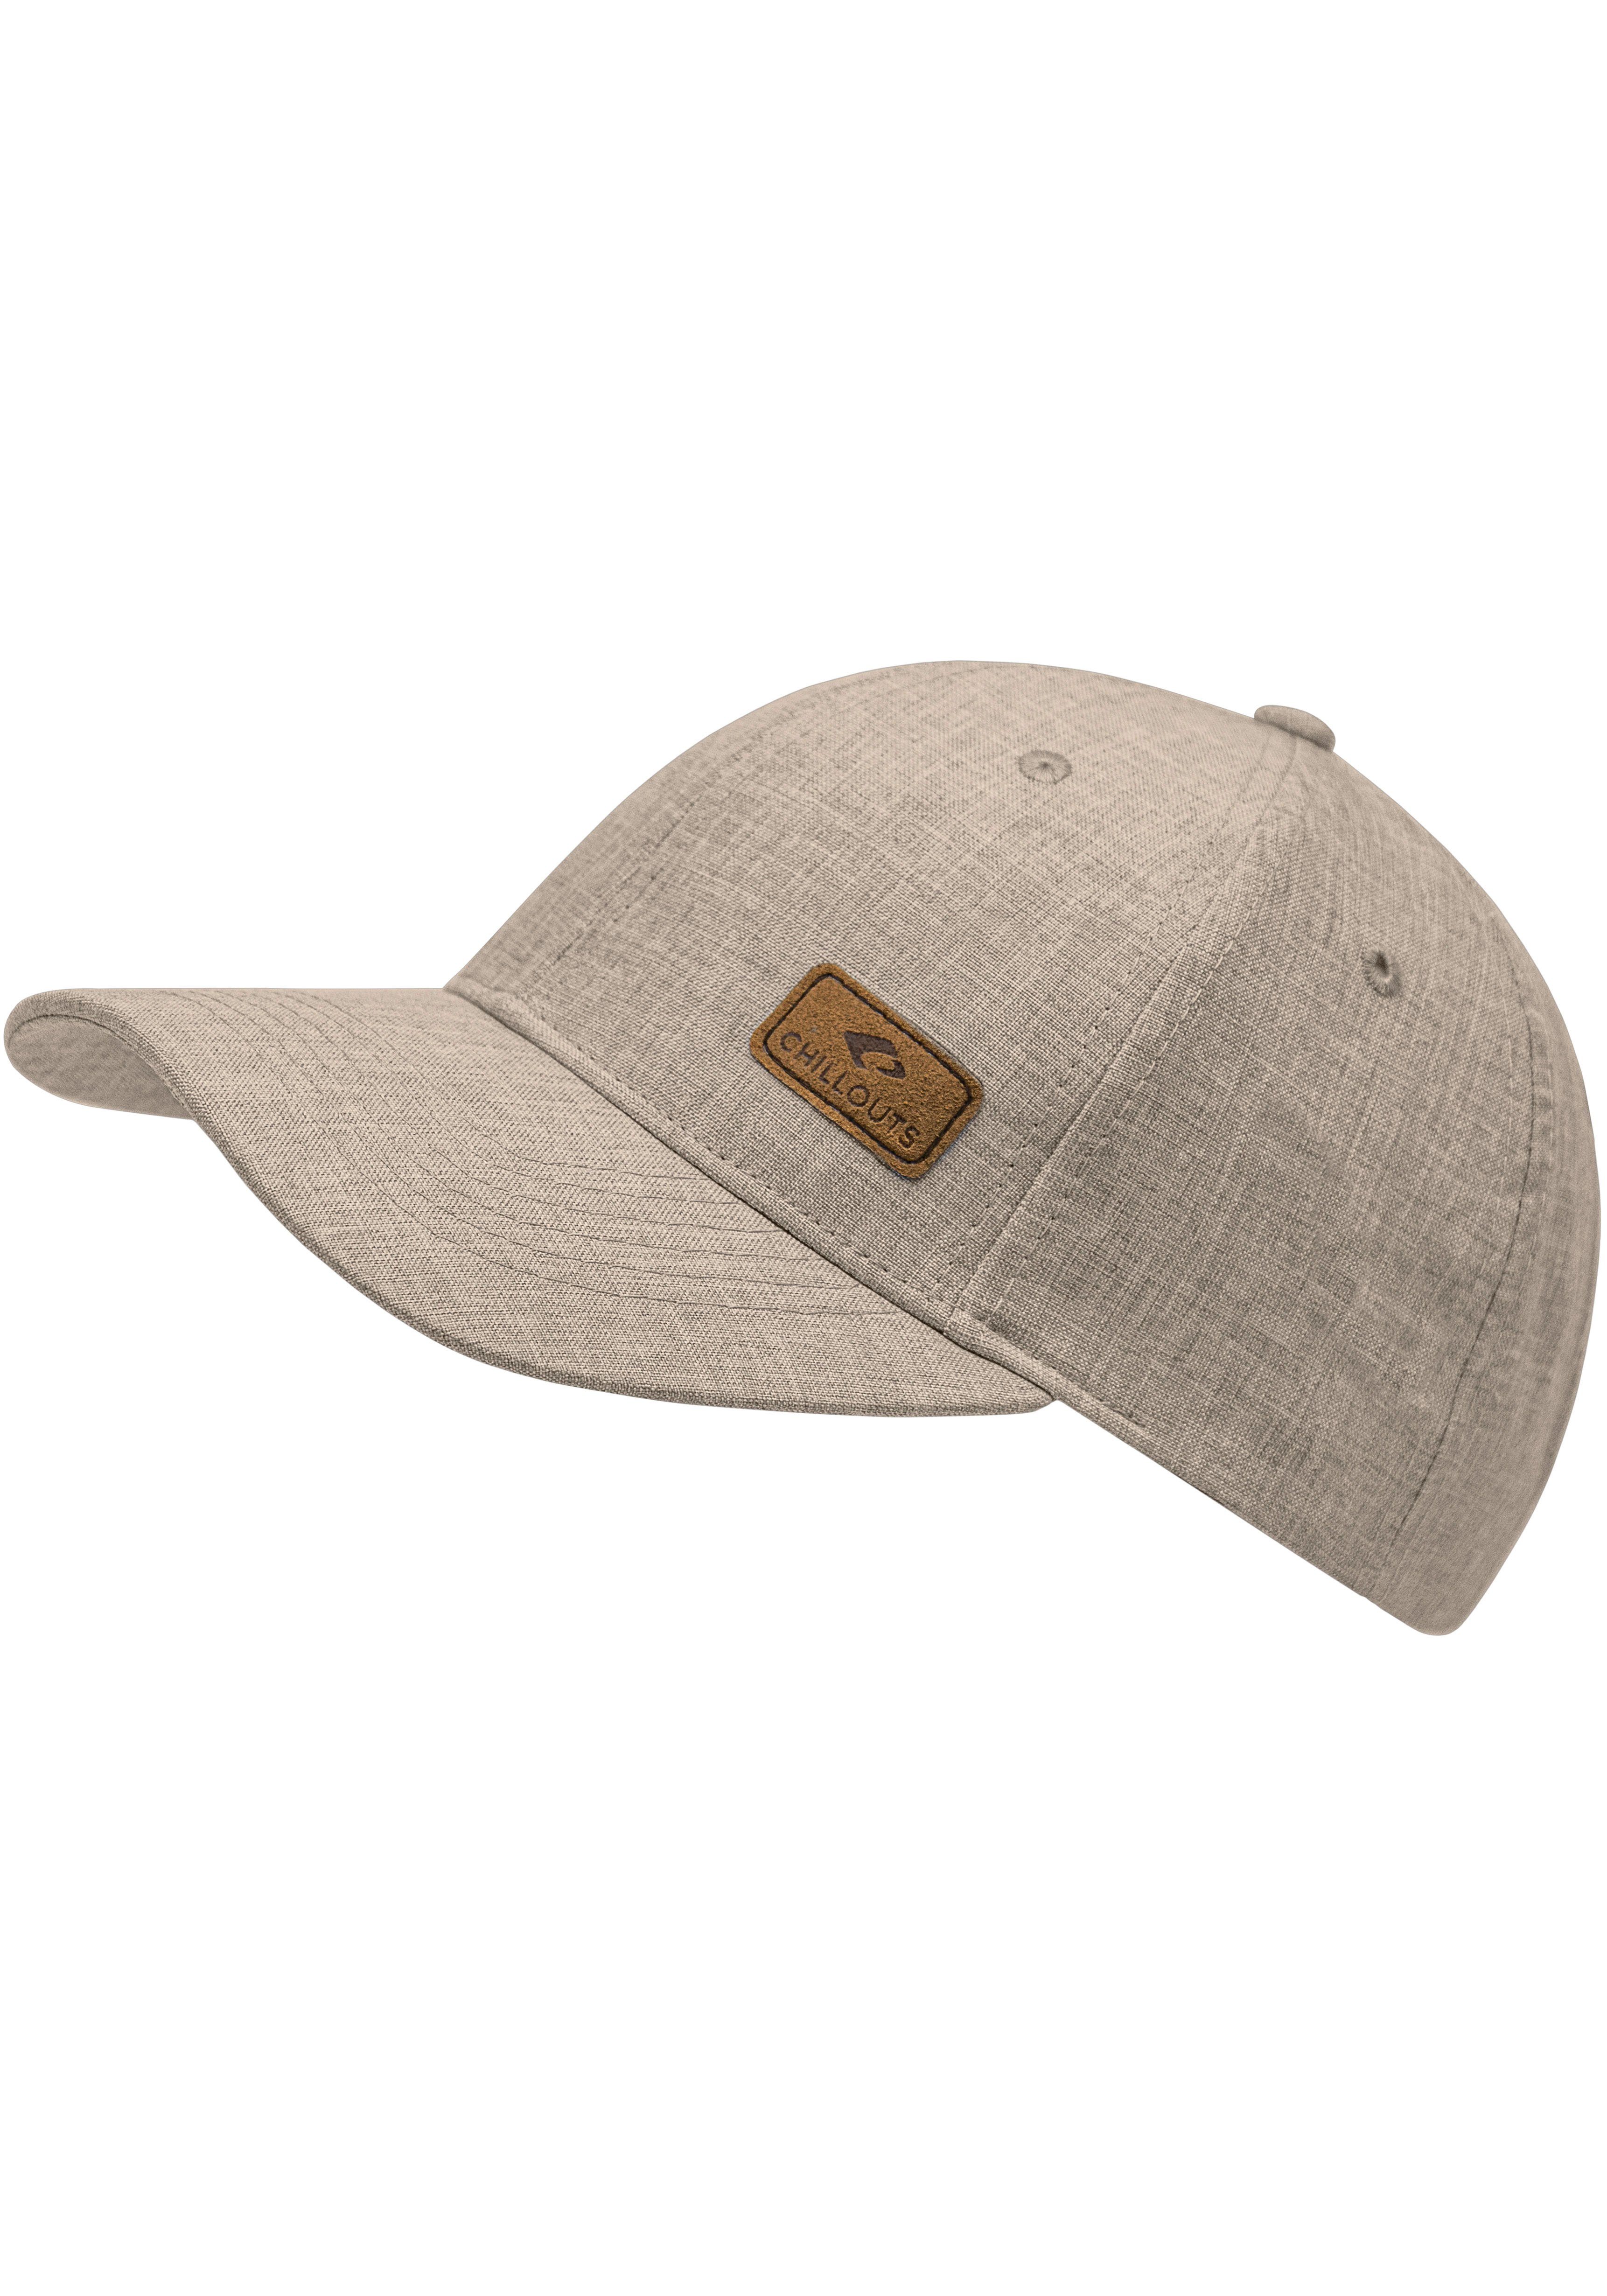 One verstellbar Amadora Hat beige Optik, Cap in Size, chillouts melierter Baseball